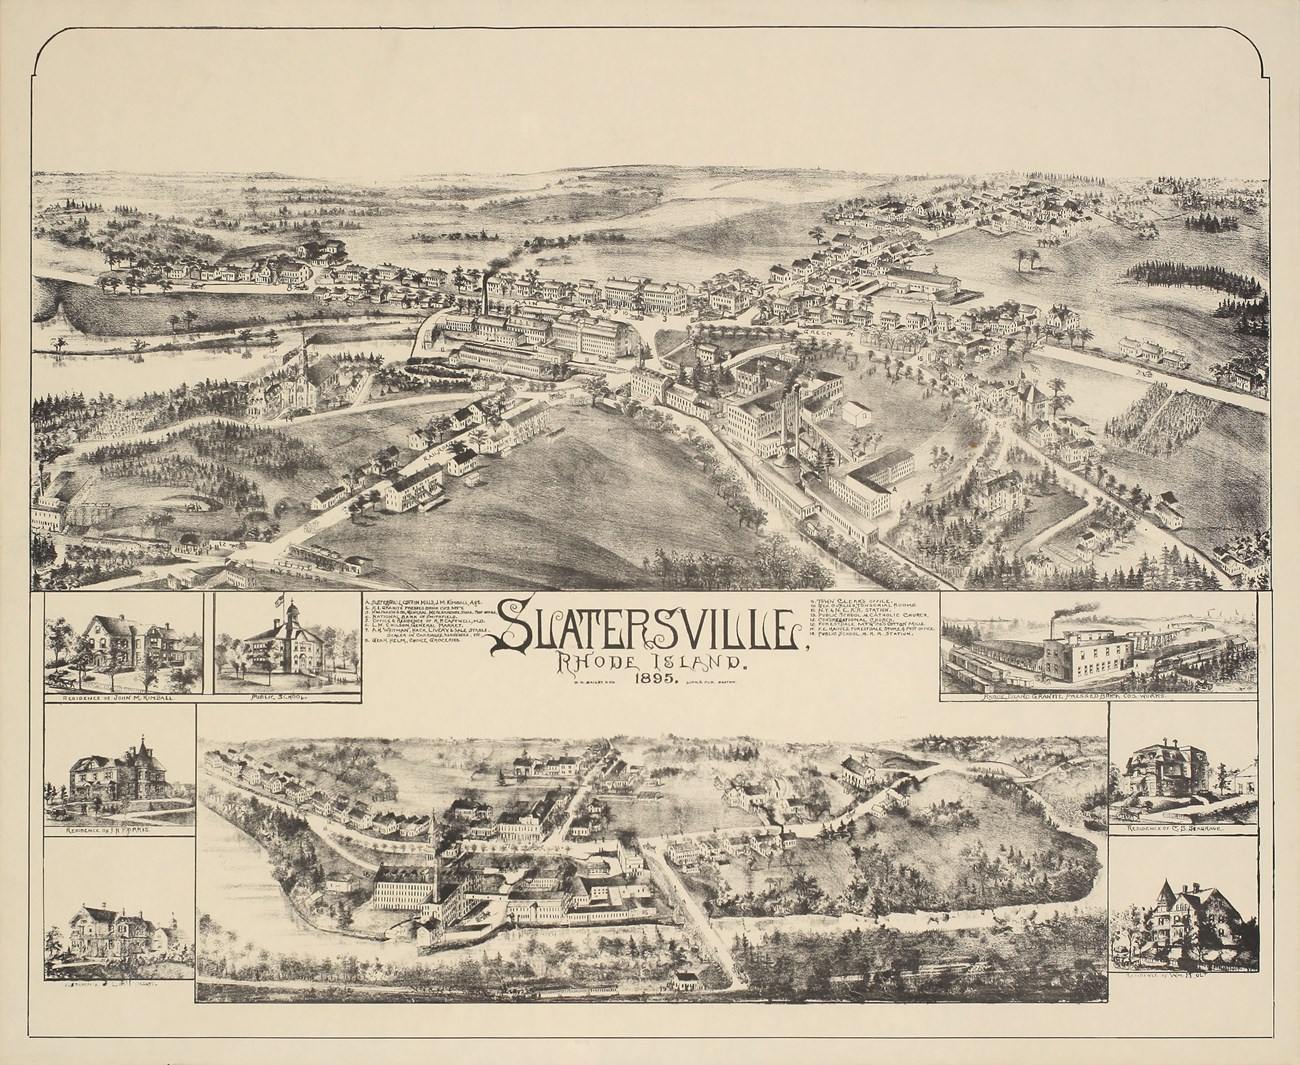 Map of Slatersville